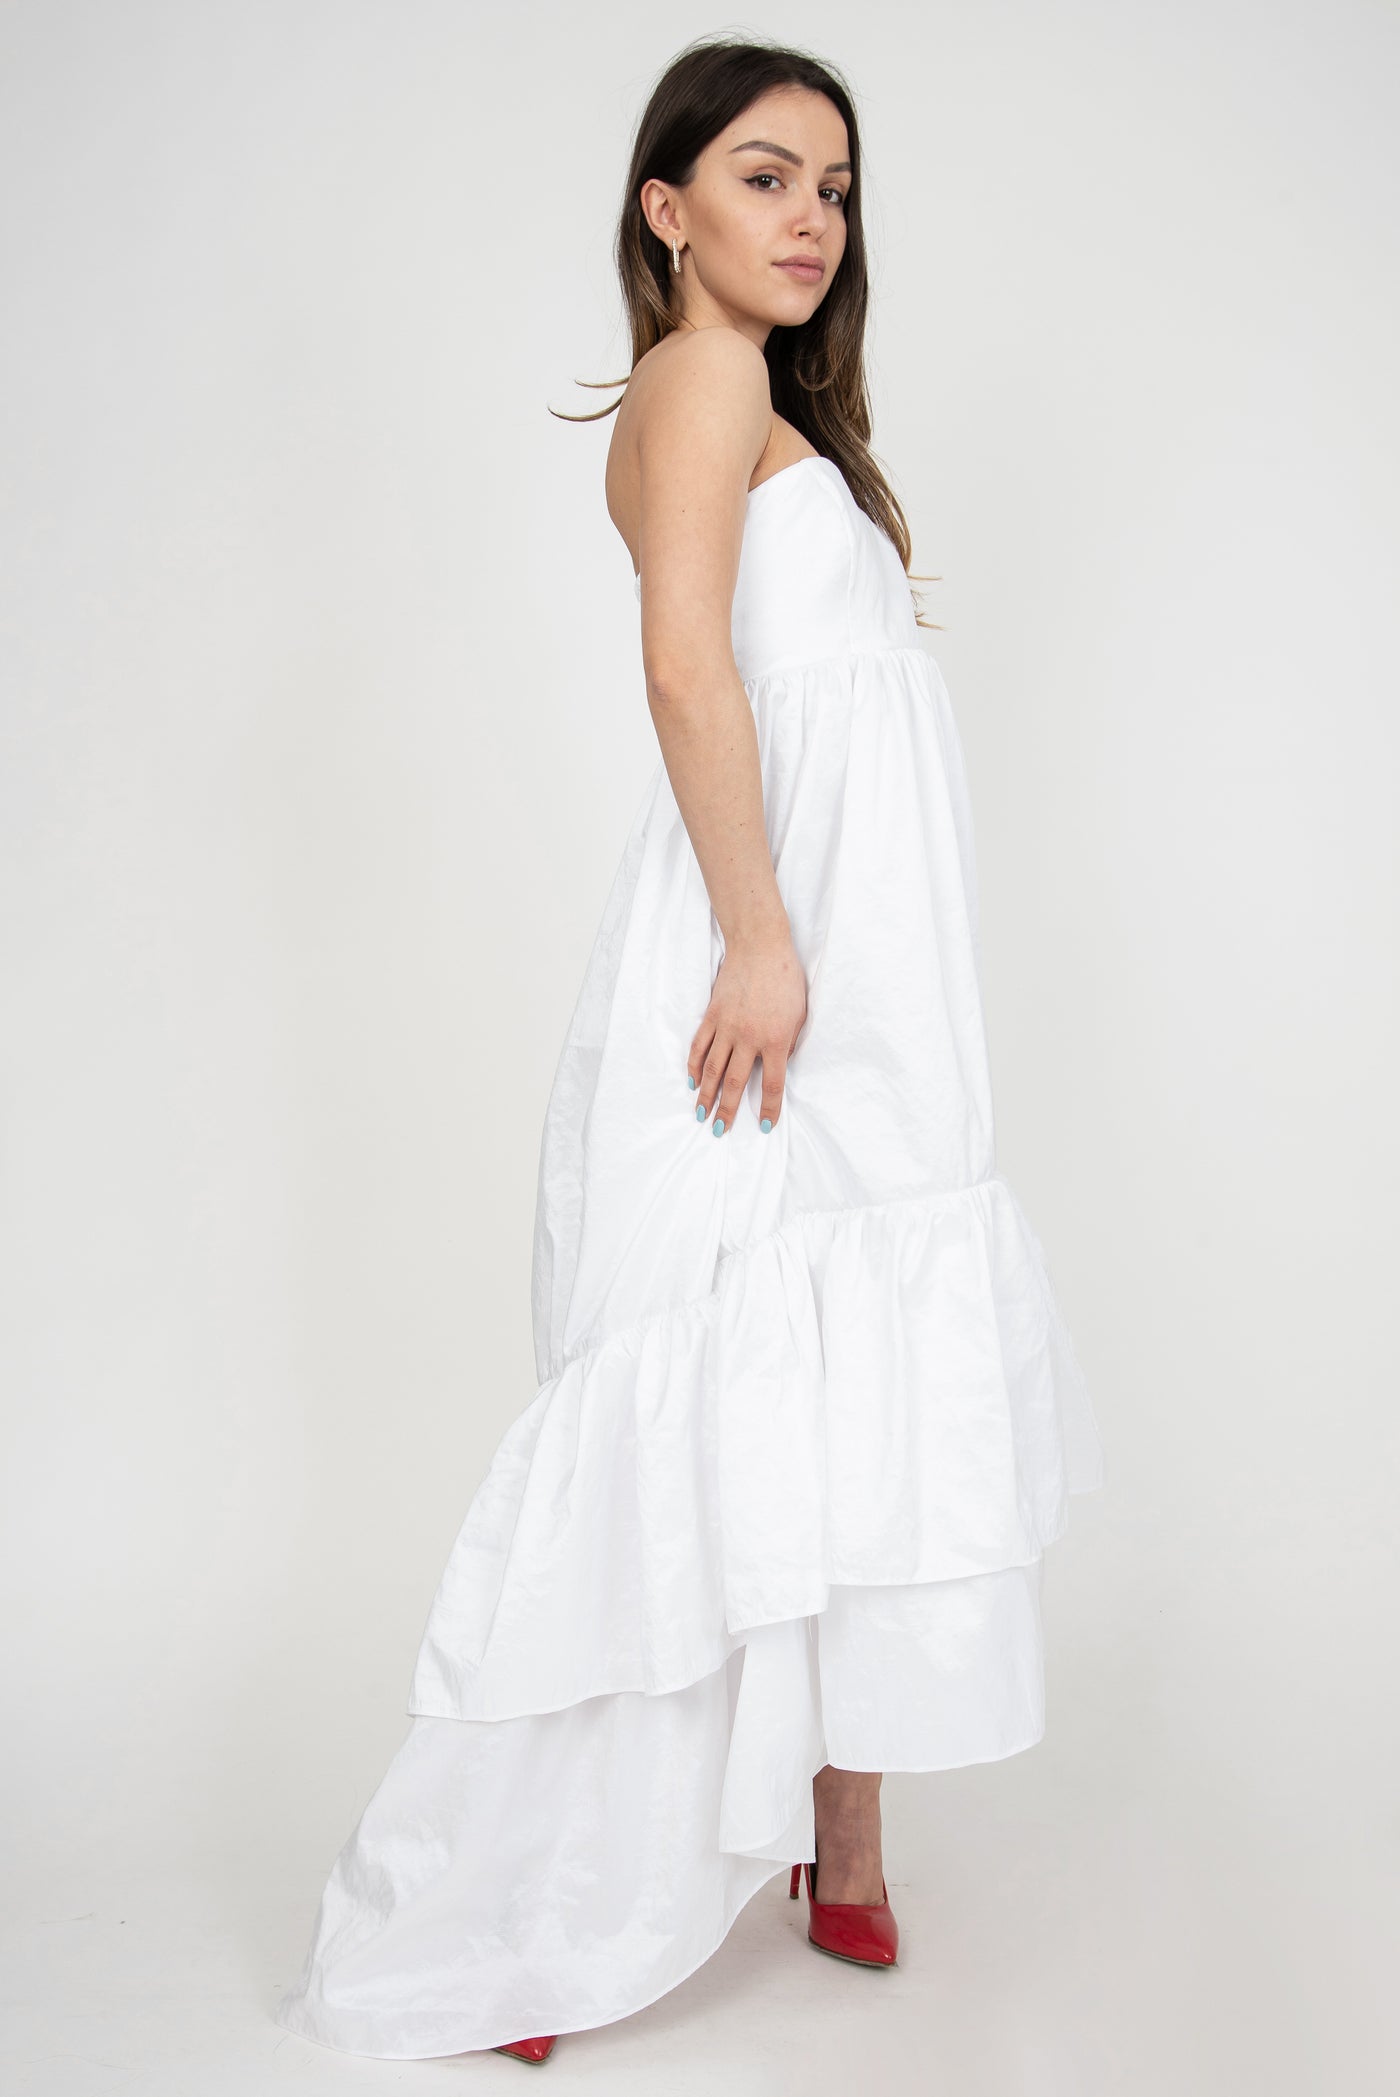 Summer asymmetrical white dress